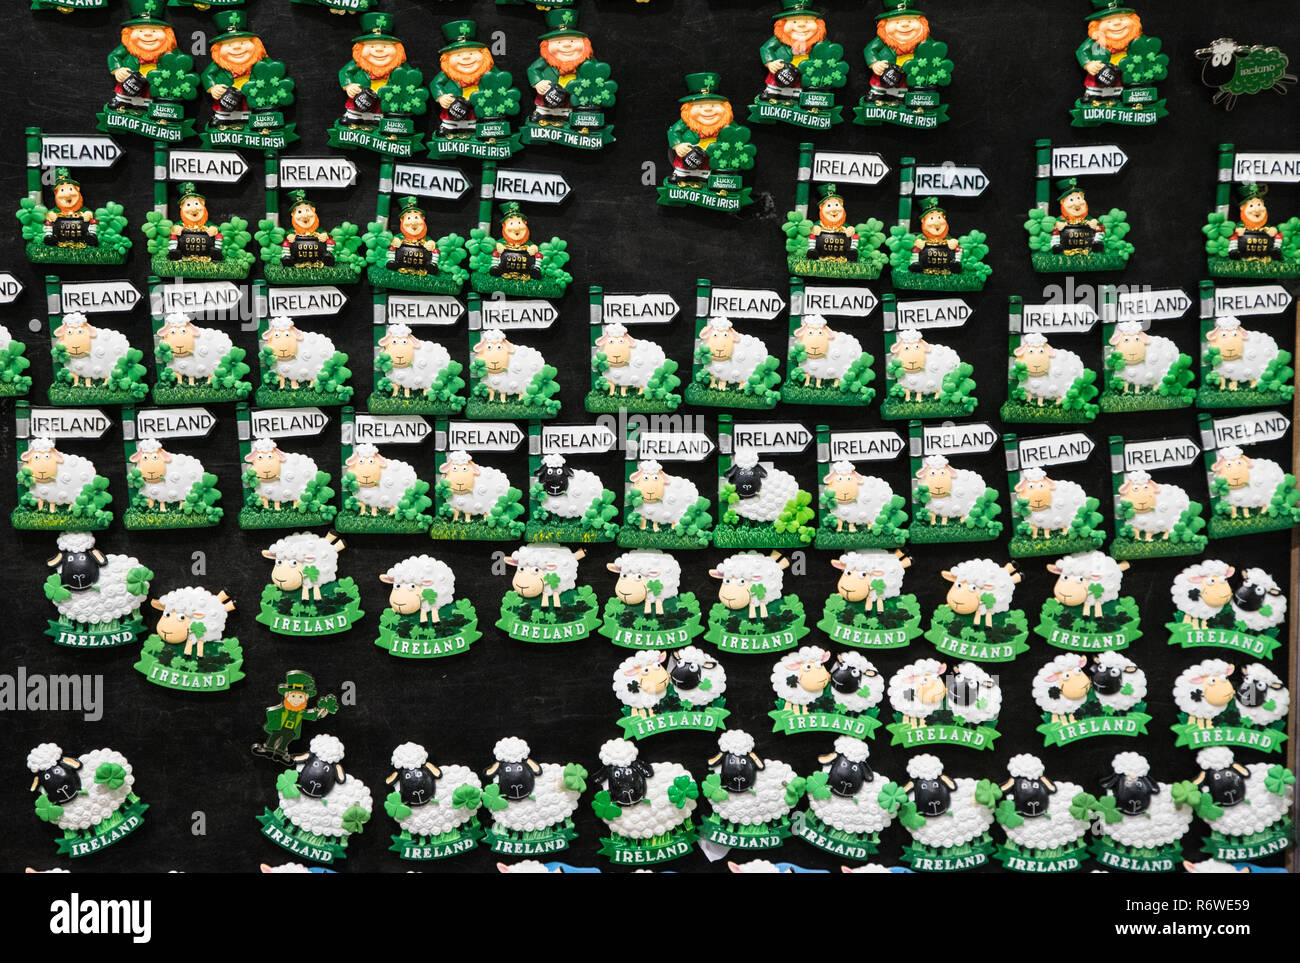 Ireland themed leprechaun and sheepfridge magnet souvenirs Stock Photo -  Alamy